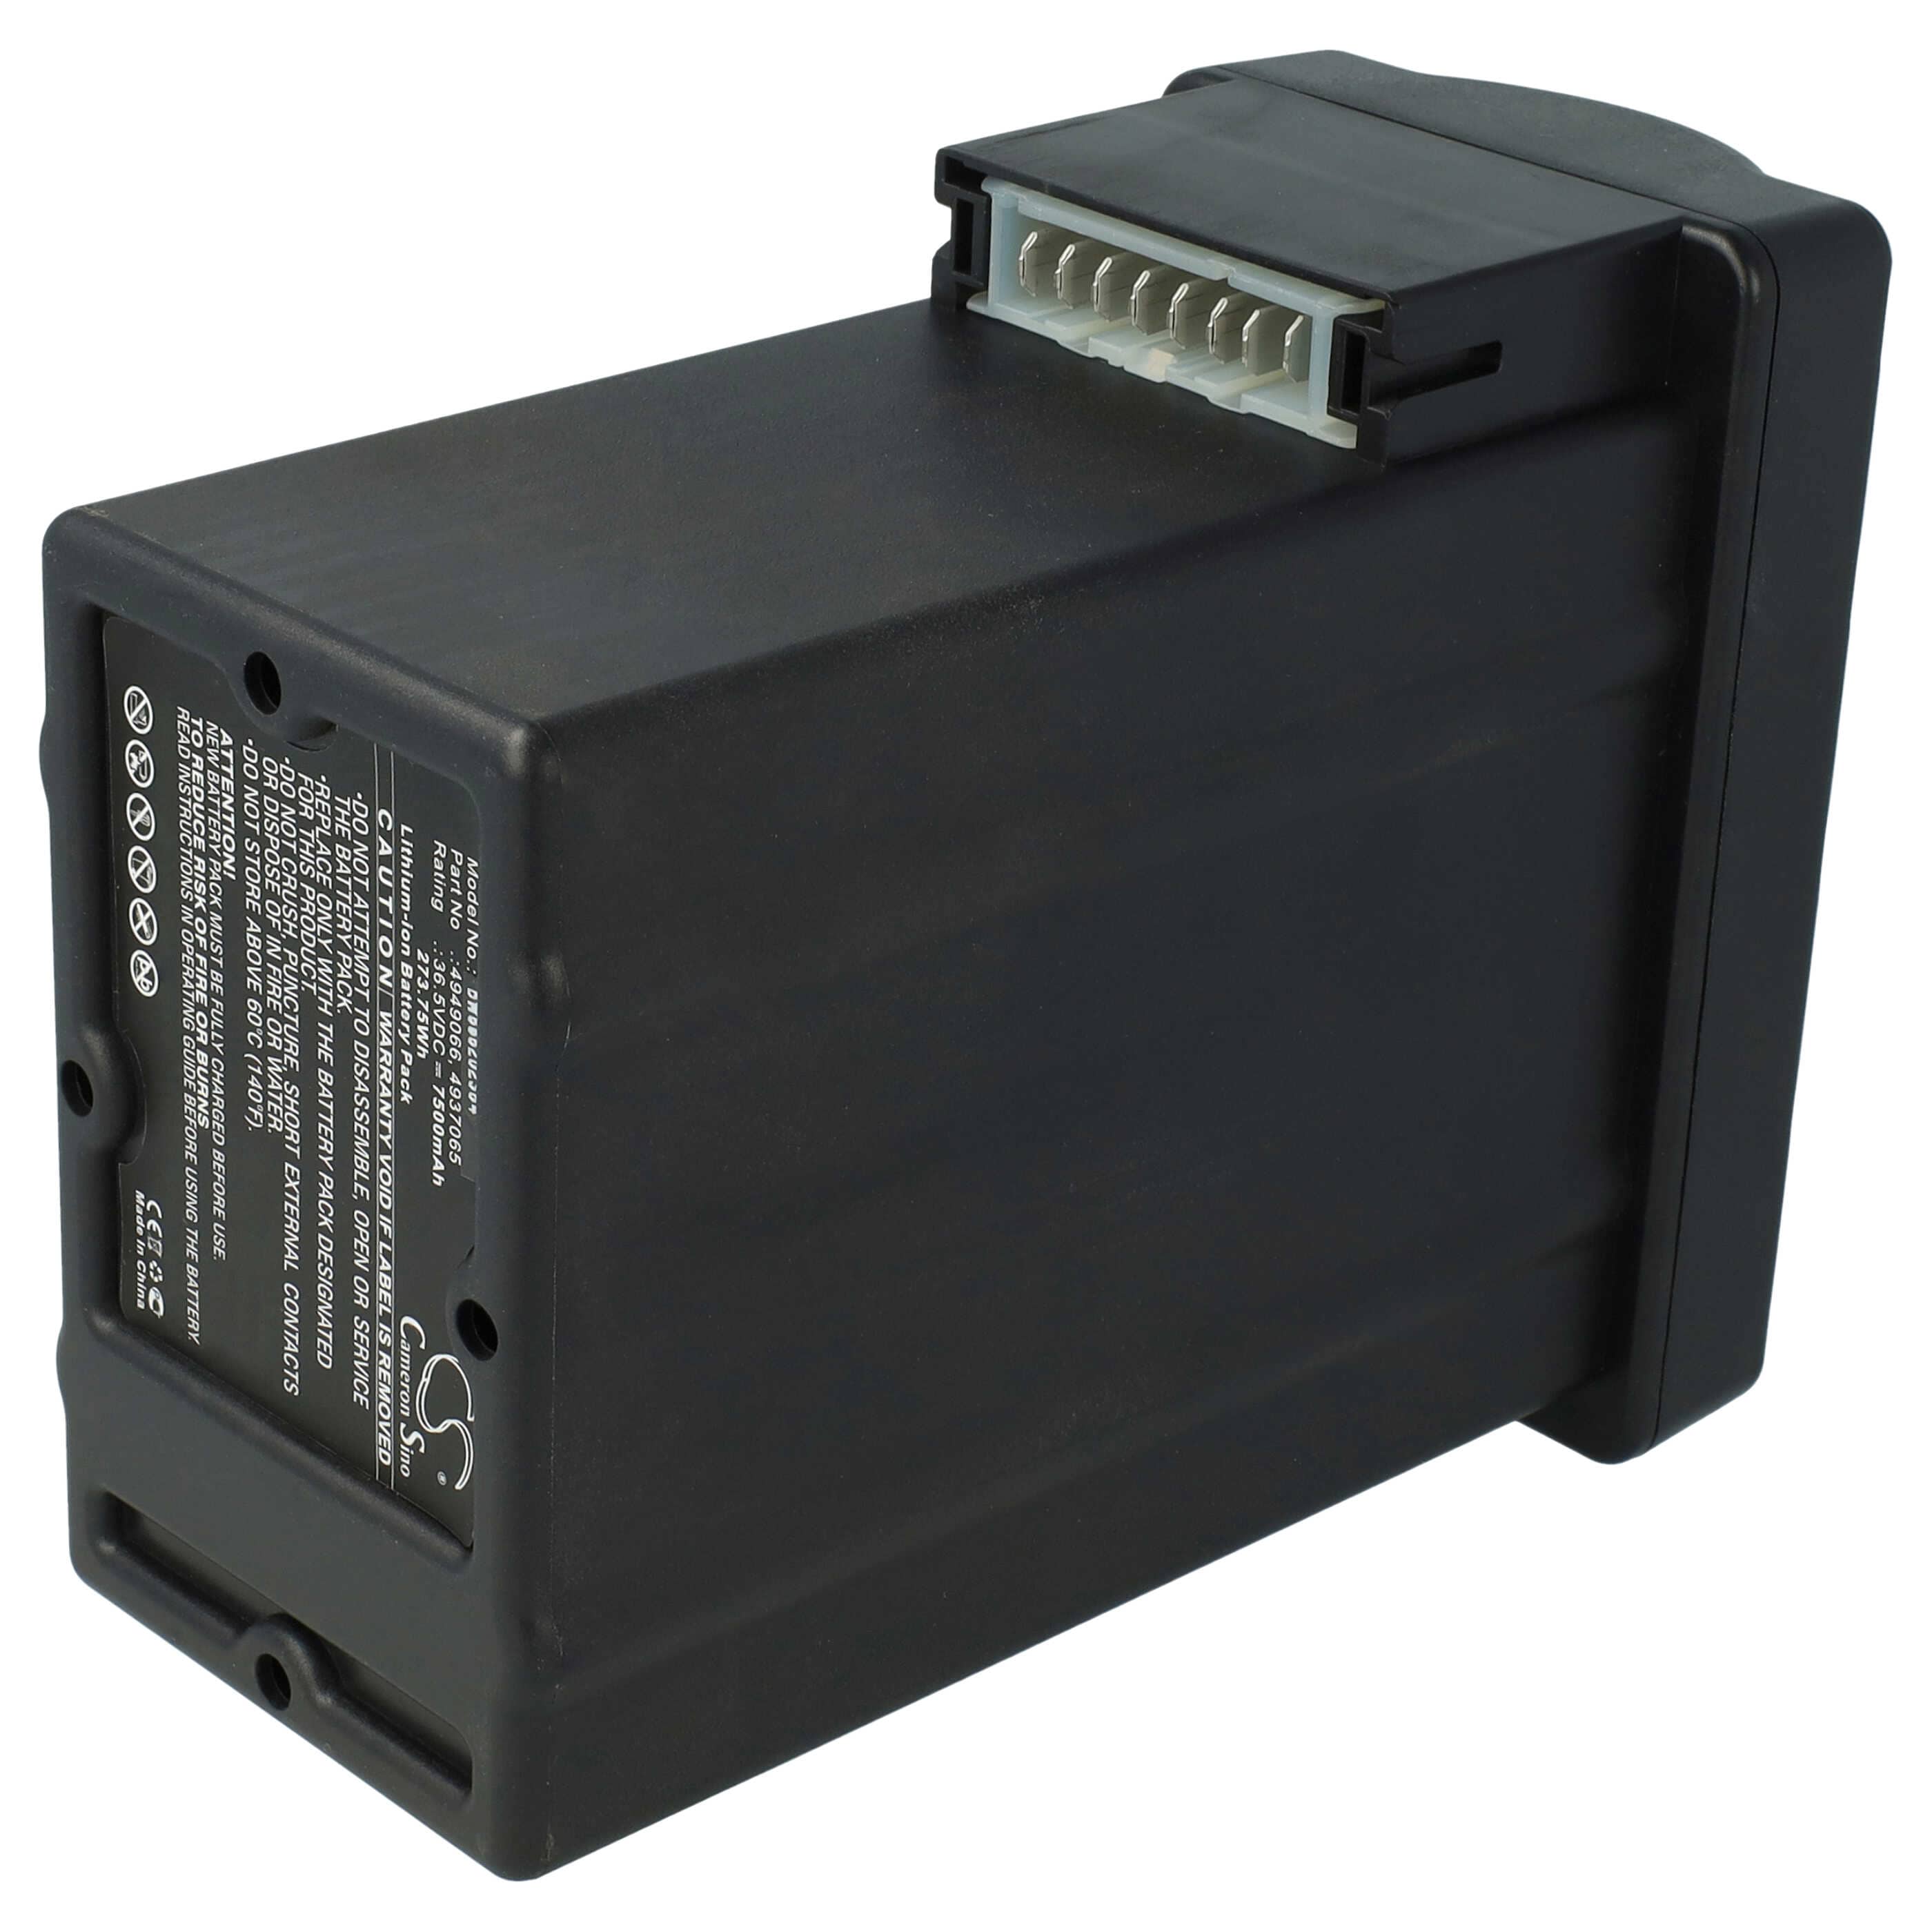 Lawnmower Battery Replacement for Wolf Garten PACK 1, 4949066, 4937065 - 7500mAh 36.5V Li-Ion, black